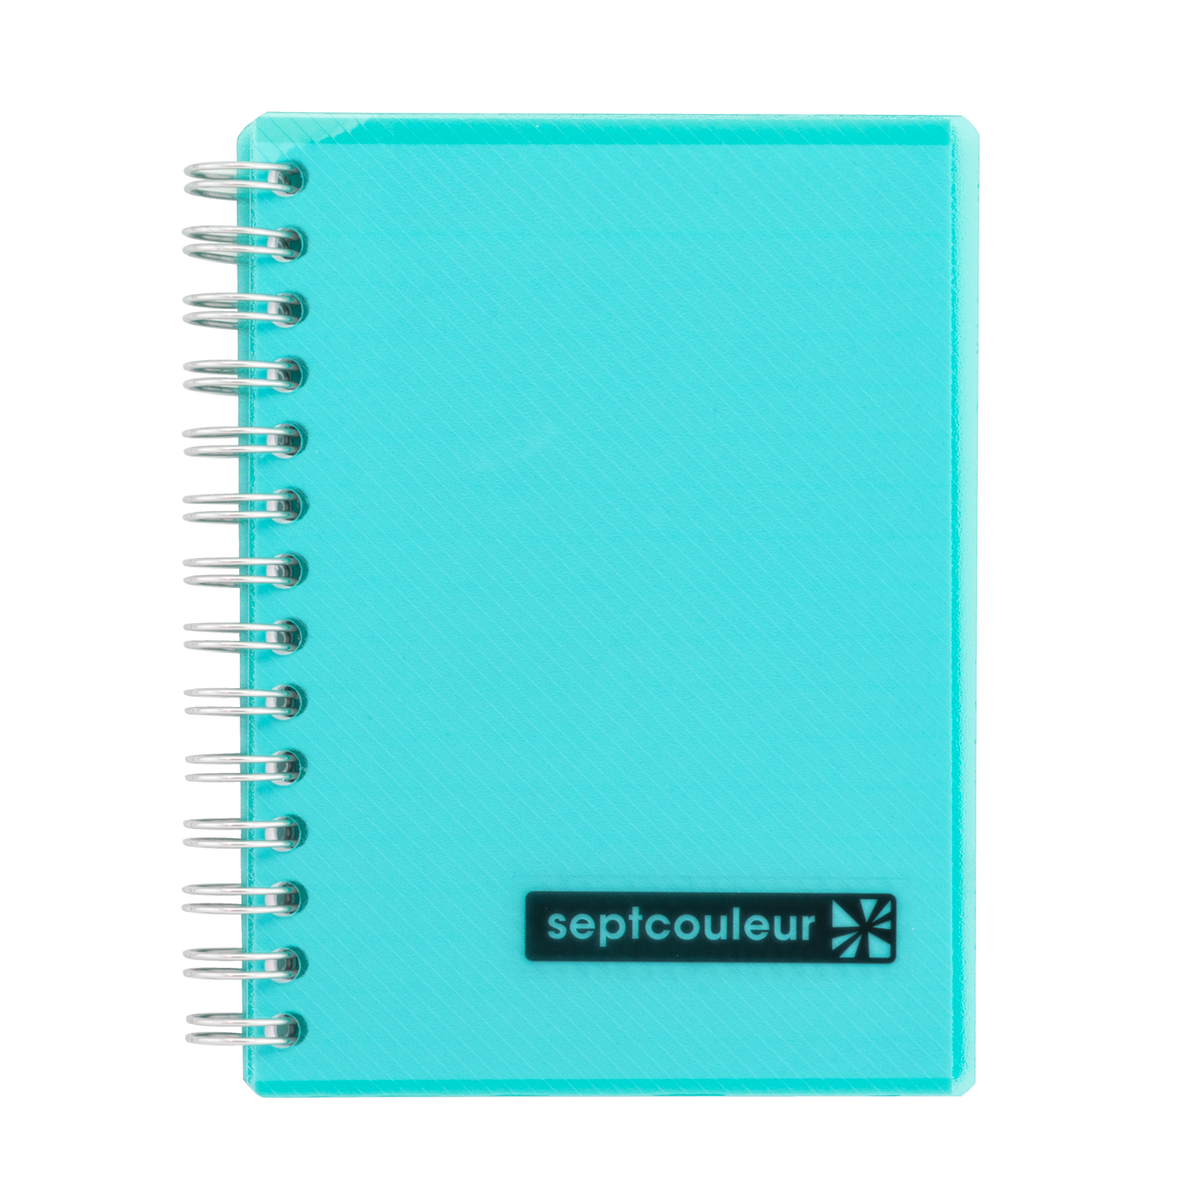 Maruman Septcouleur Notebooks B7 - 6.5mm Rule- Lined